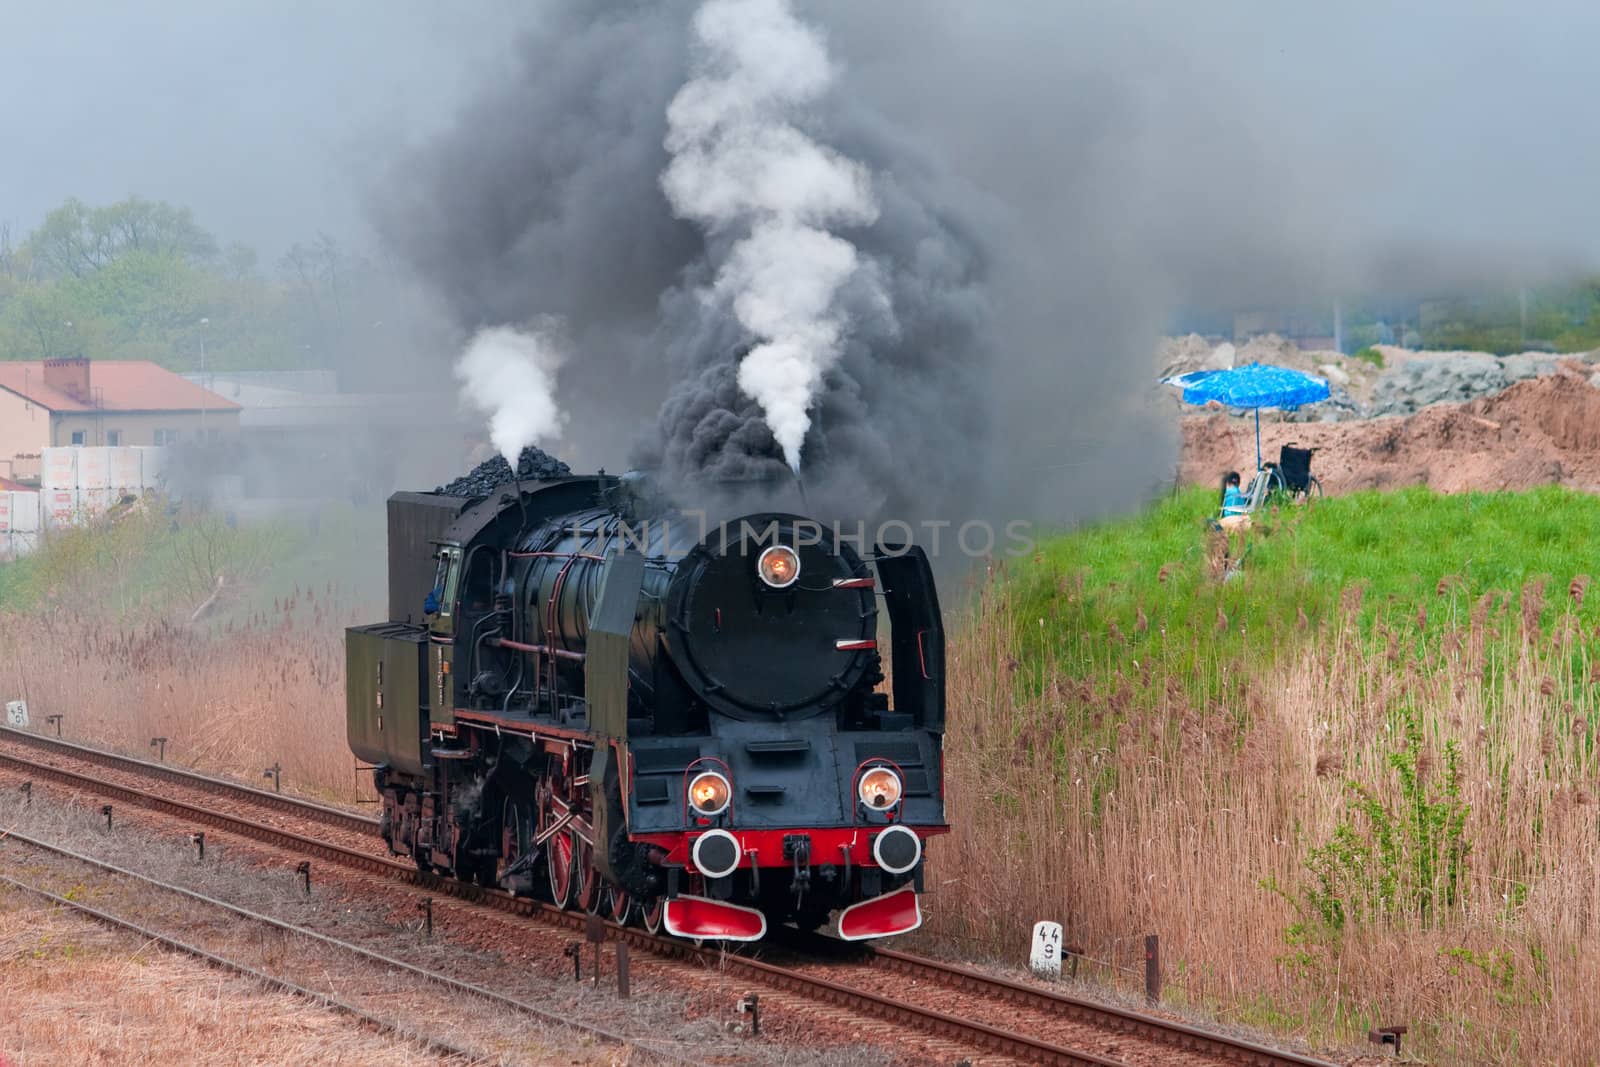 Old steam locomotive by remik44992